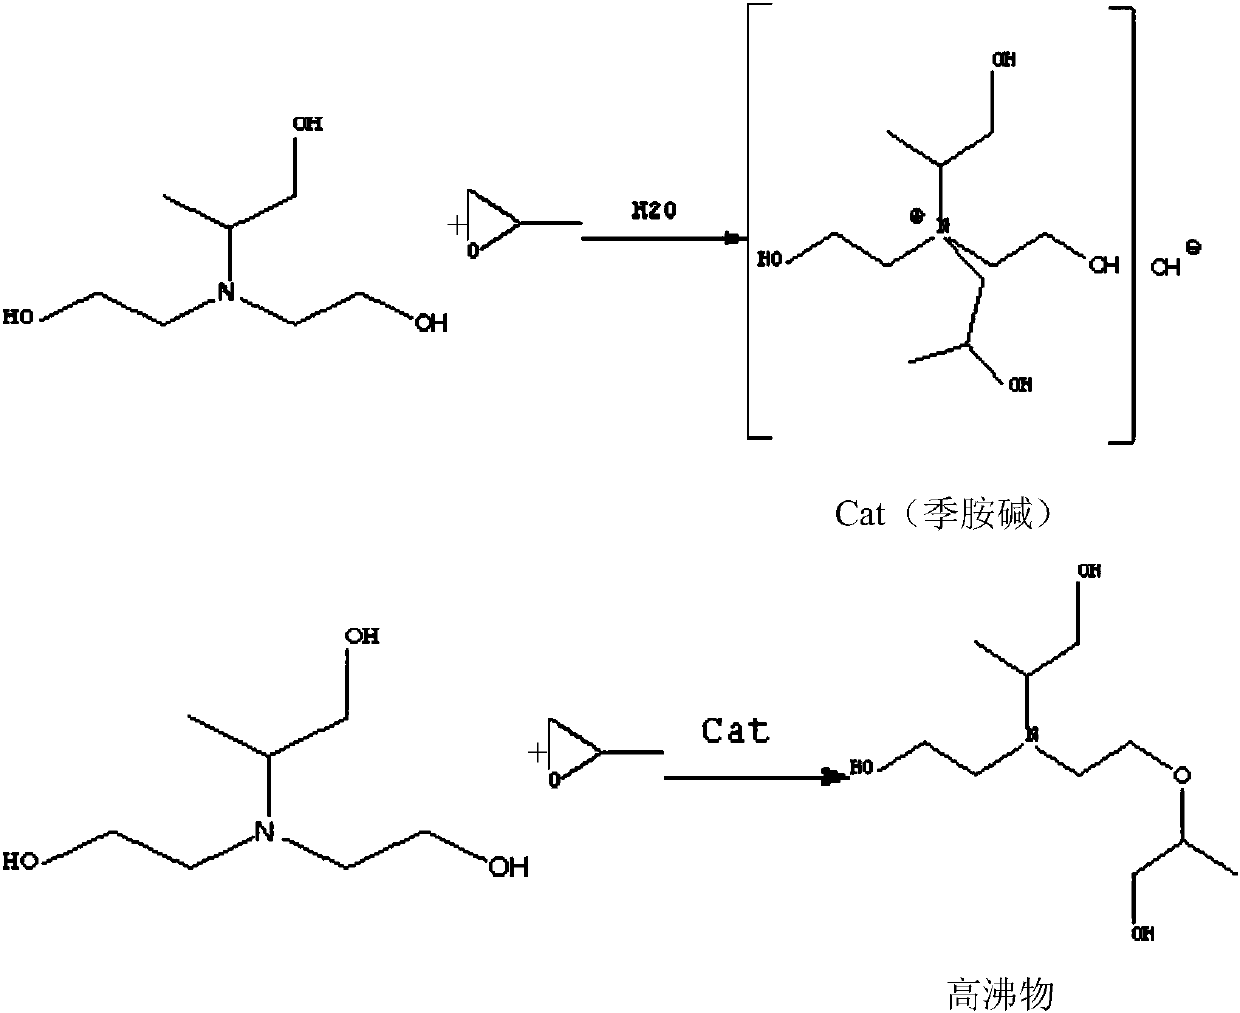 Production method of diethanolisopropanolamine